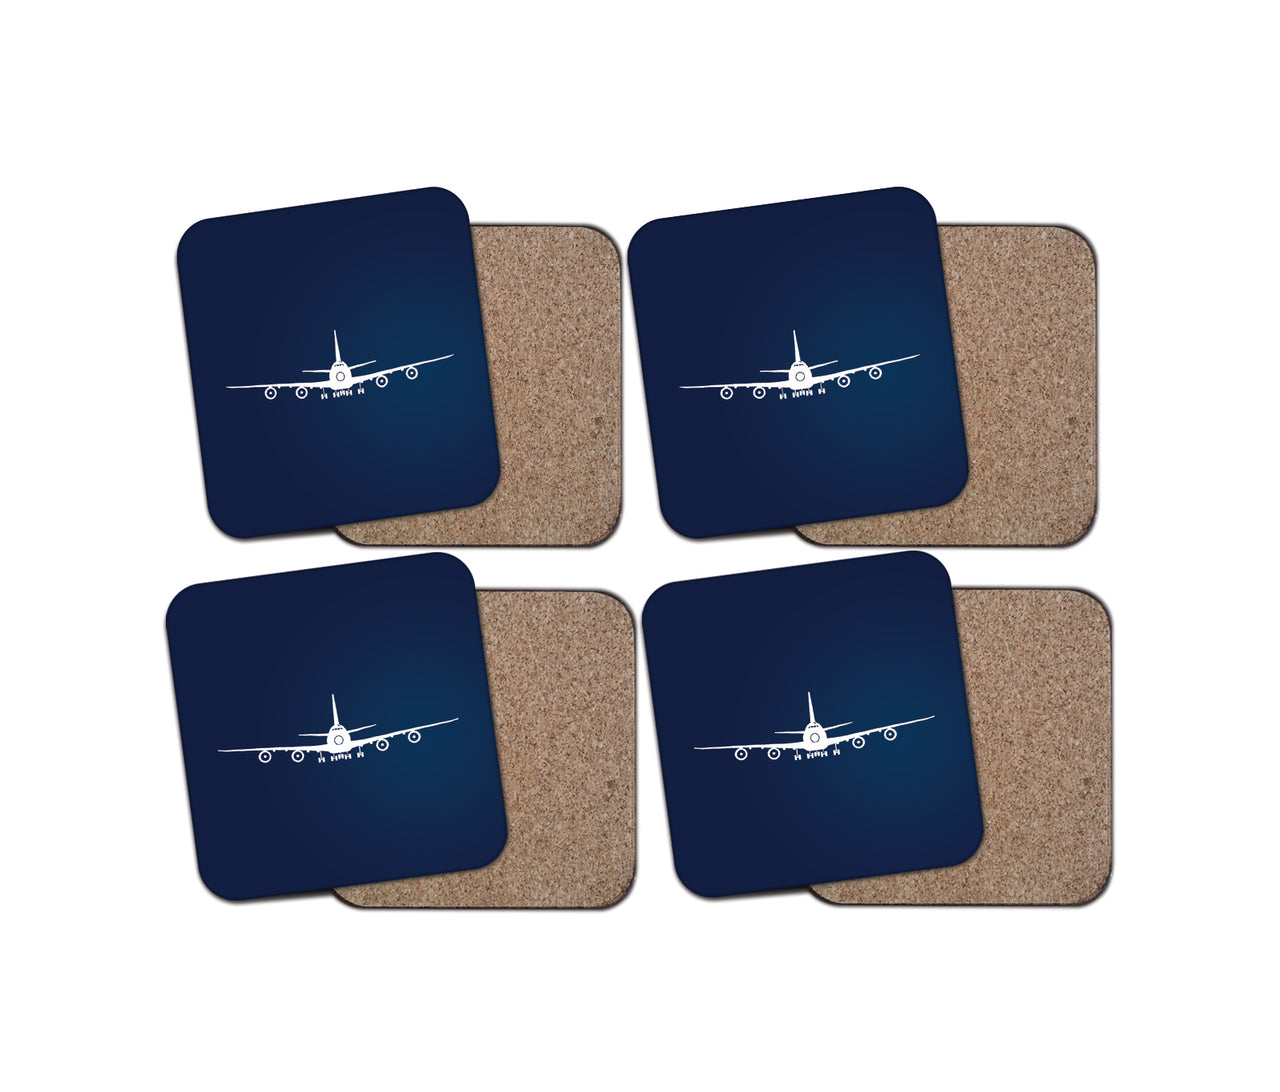 Boeing 747 Silhouette Designed Coasters